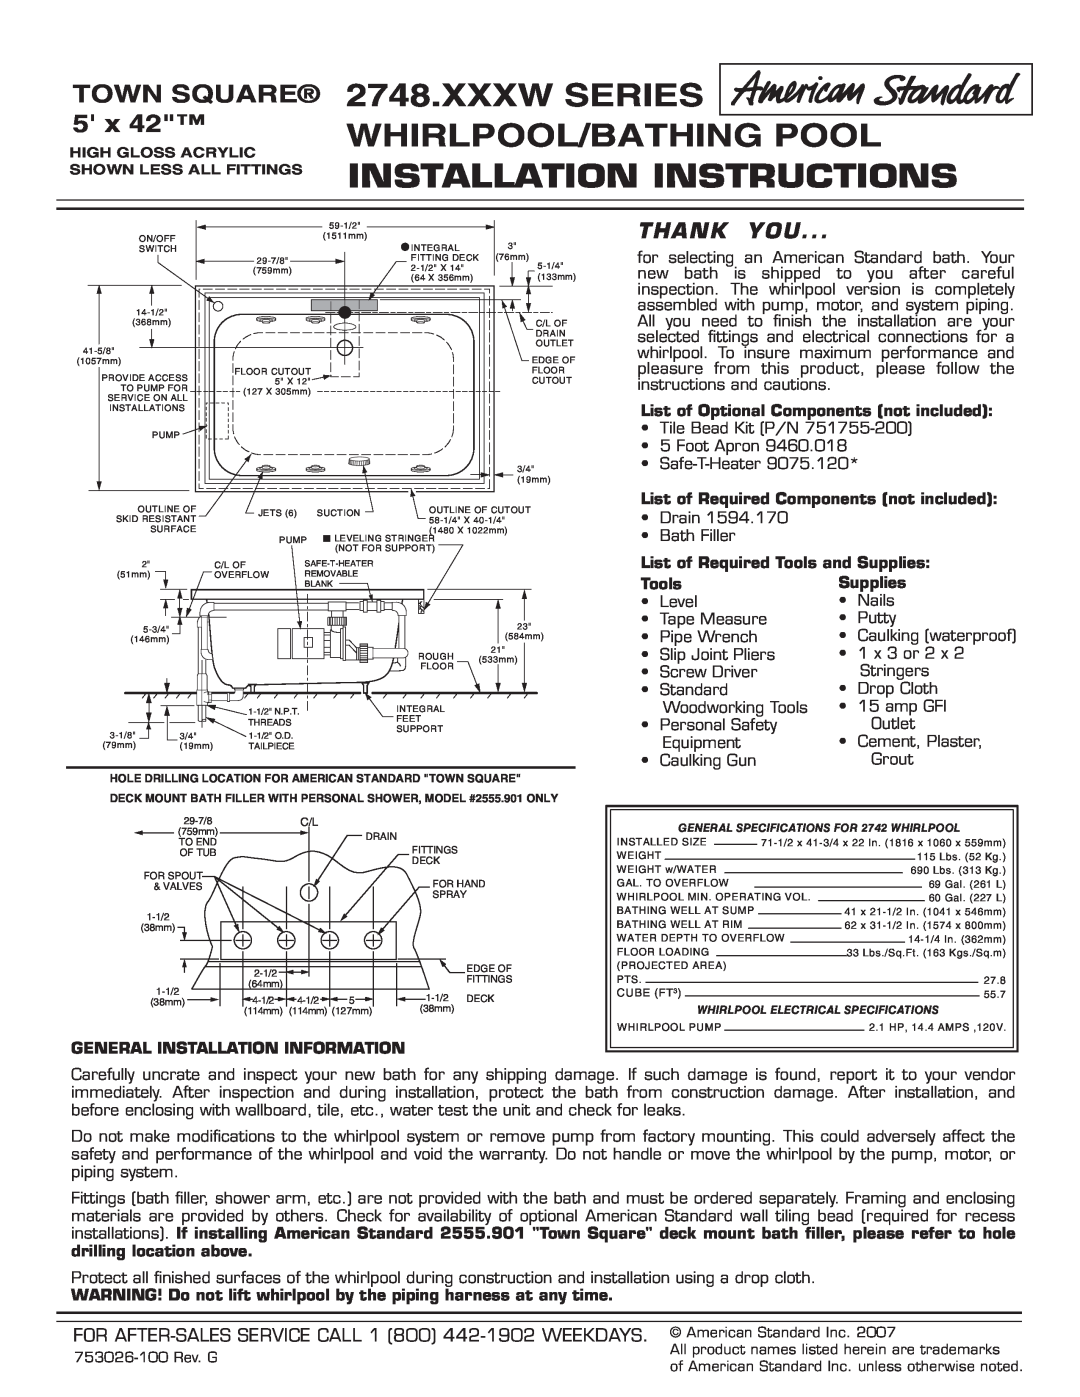 American Standard 2748.XXXW installation instructions Xxxw Series Whirlpool/Bathing Pool Installation Instructions, Tools 